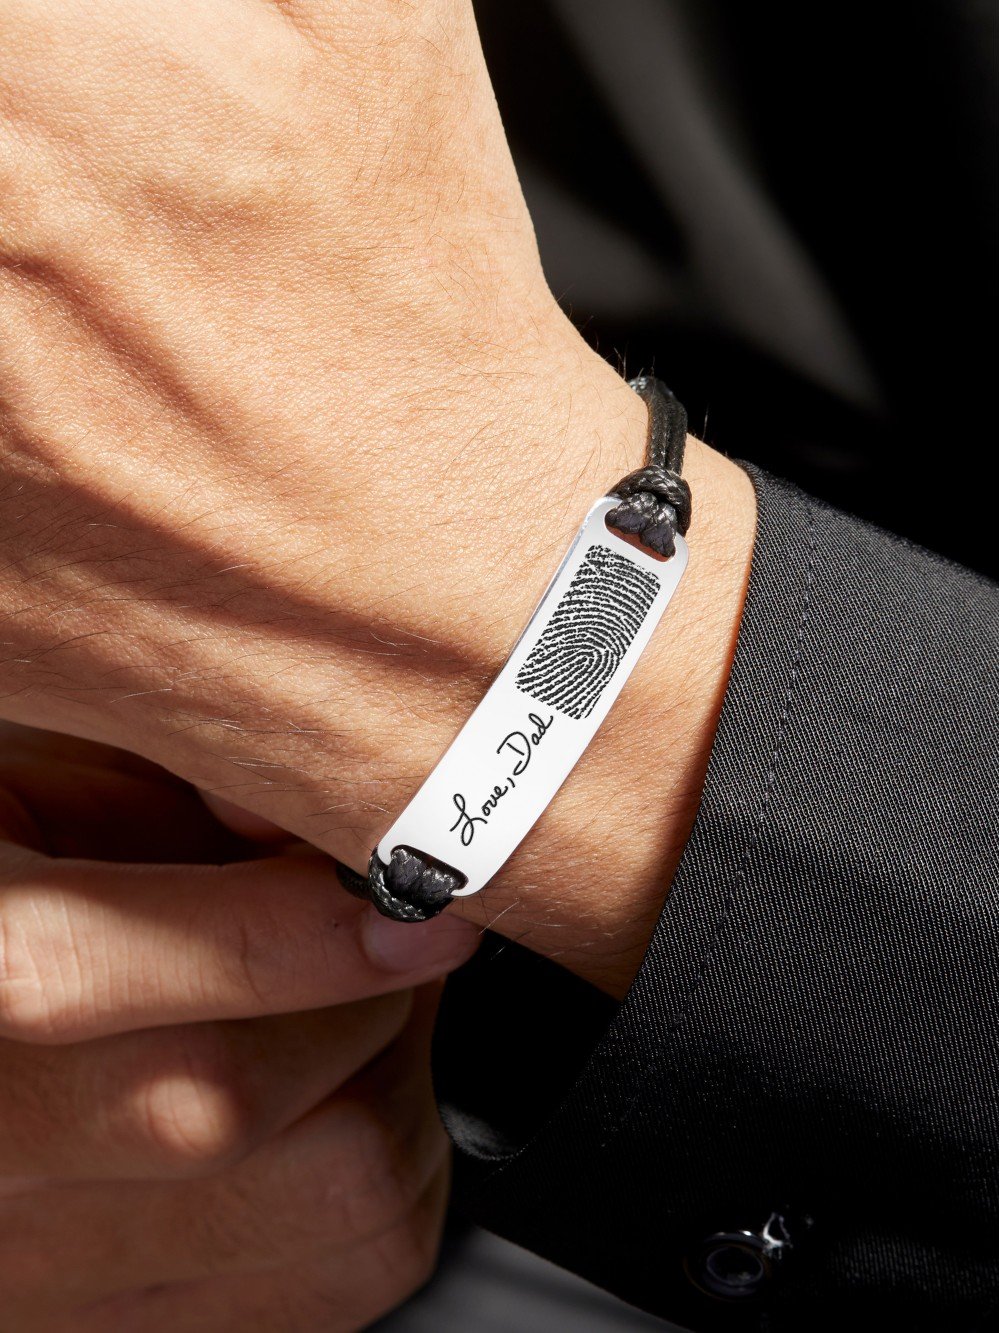 Gift for Husband - Toronto Men's Black Leather Bracelet with Black Accent - Gift for Him - Engraved Bracelet for Him - Gift for Dad